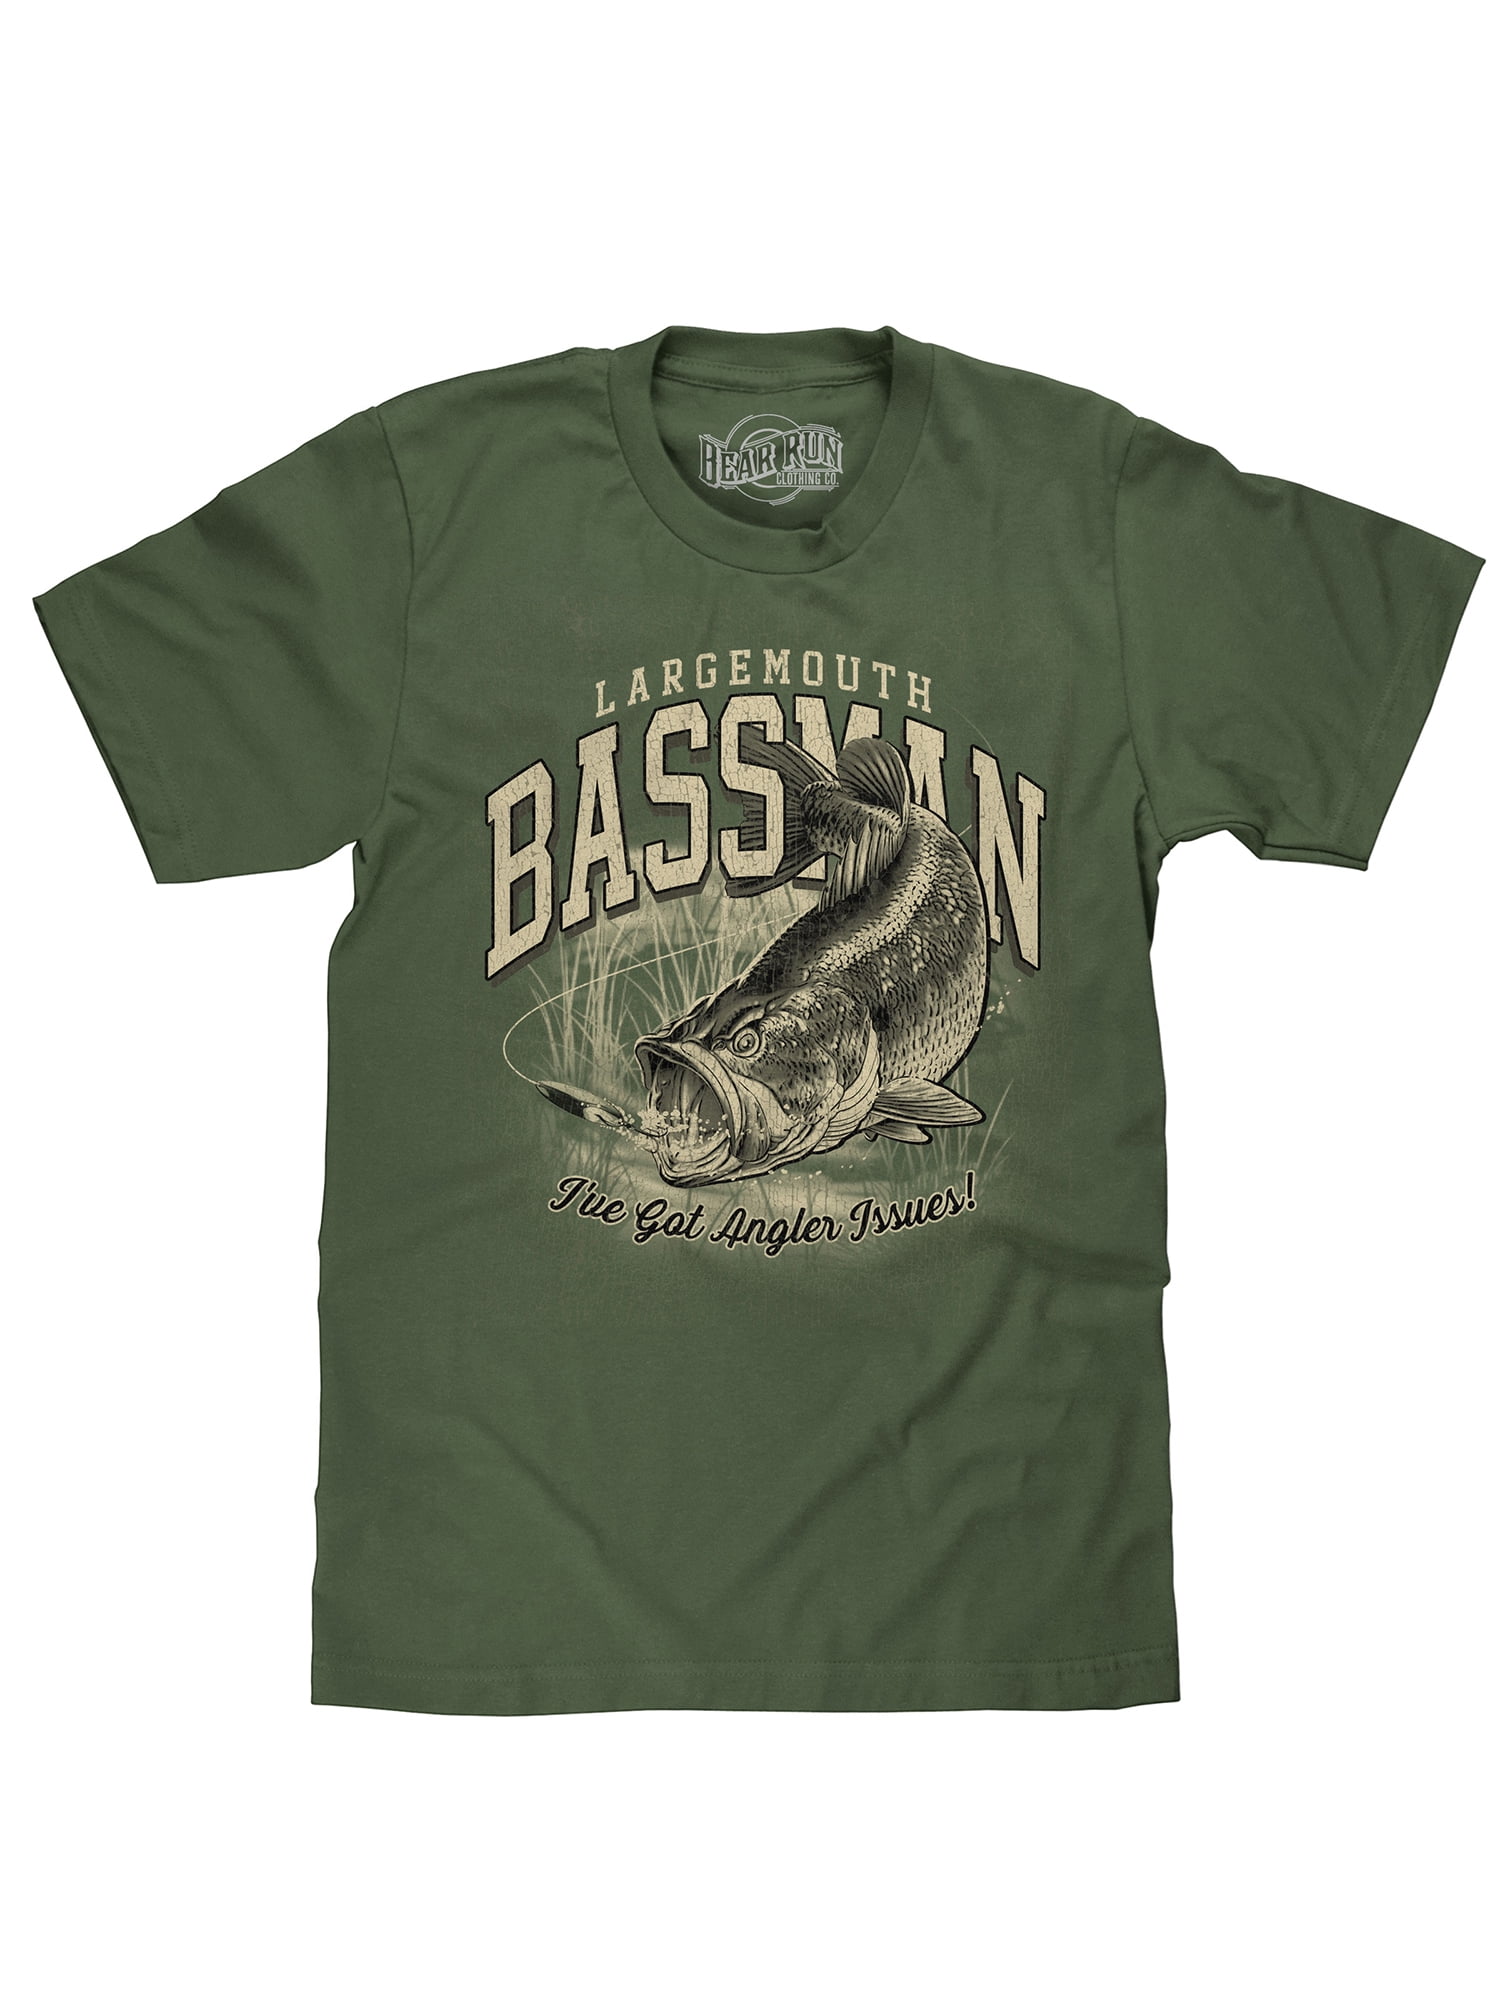 Bear Run Clothing Co. Men's Largemouth Bassman Angler Issues Fishing T-Shirt